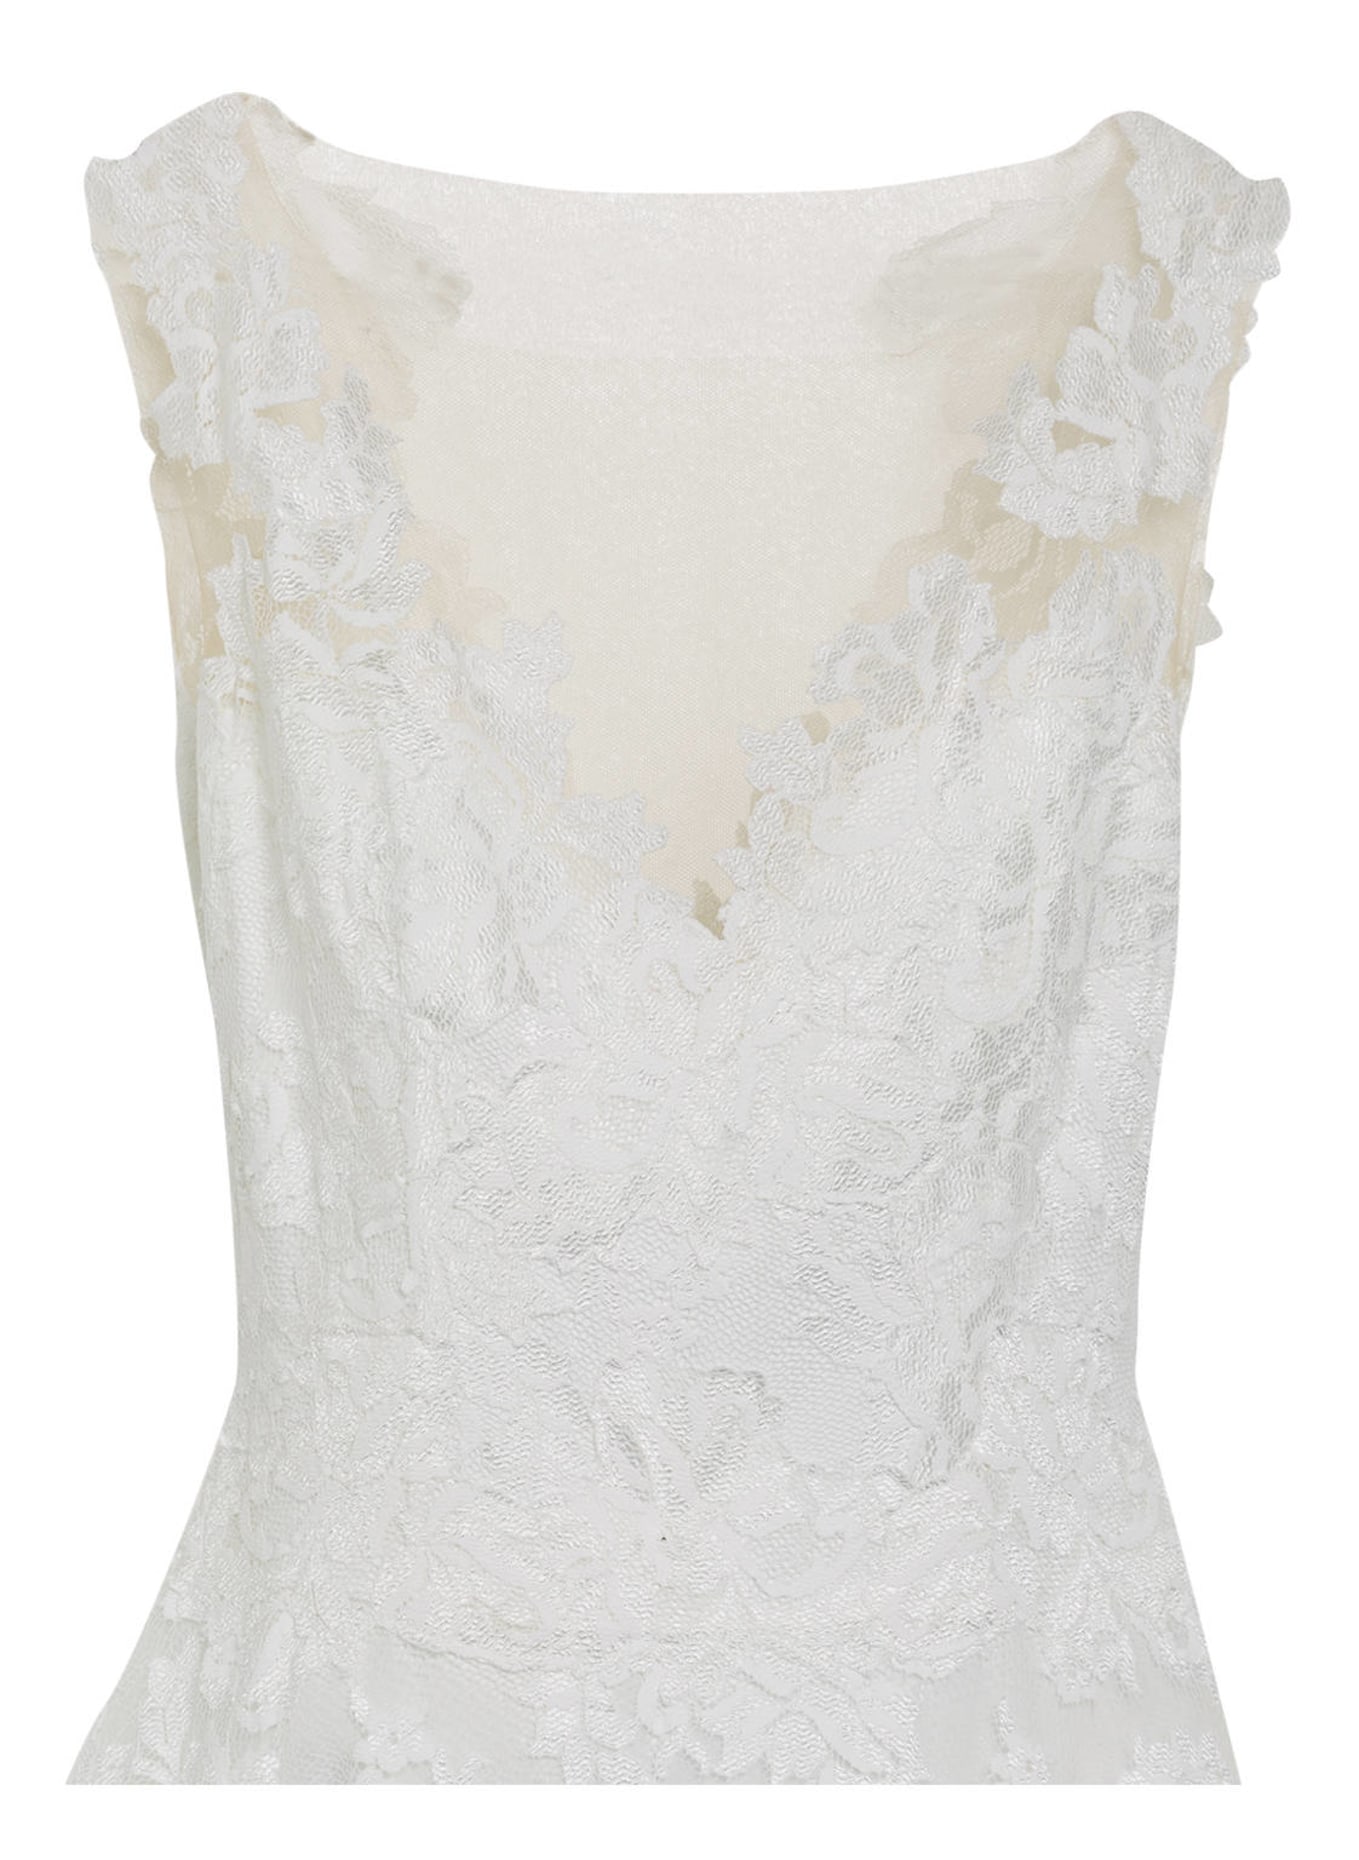 OLVI'S Cocktail dress with lace trim, Color: WHITE (Image 3)